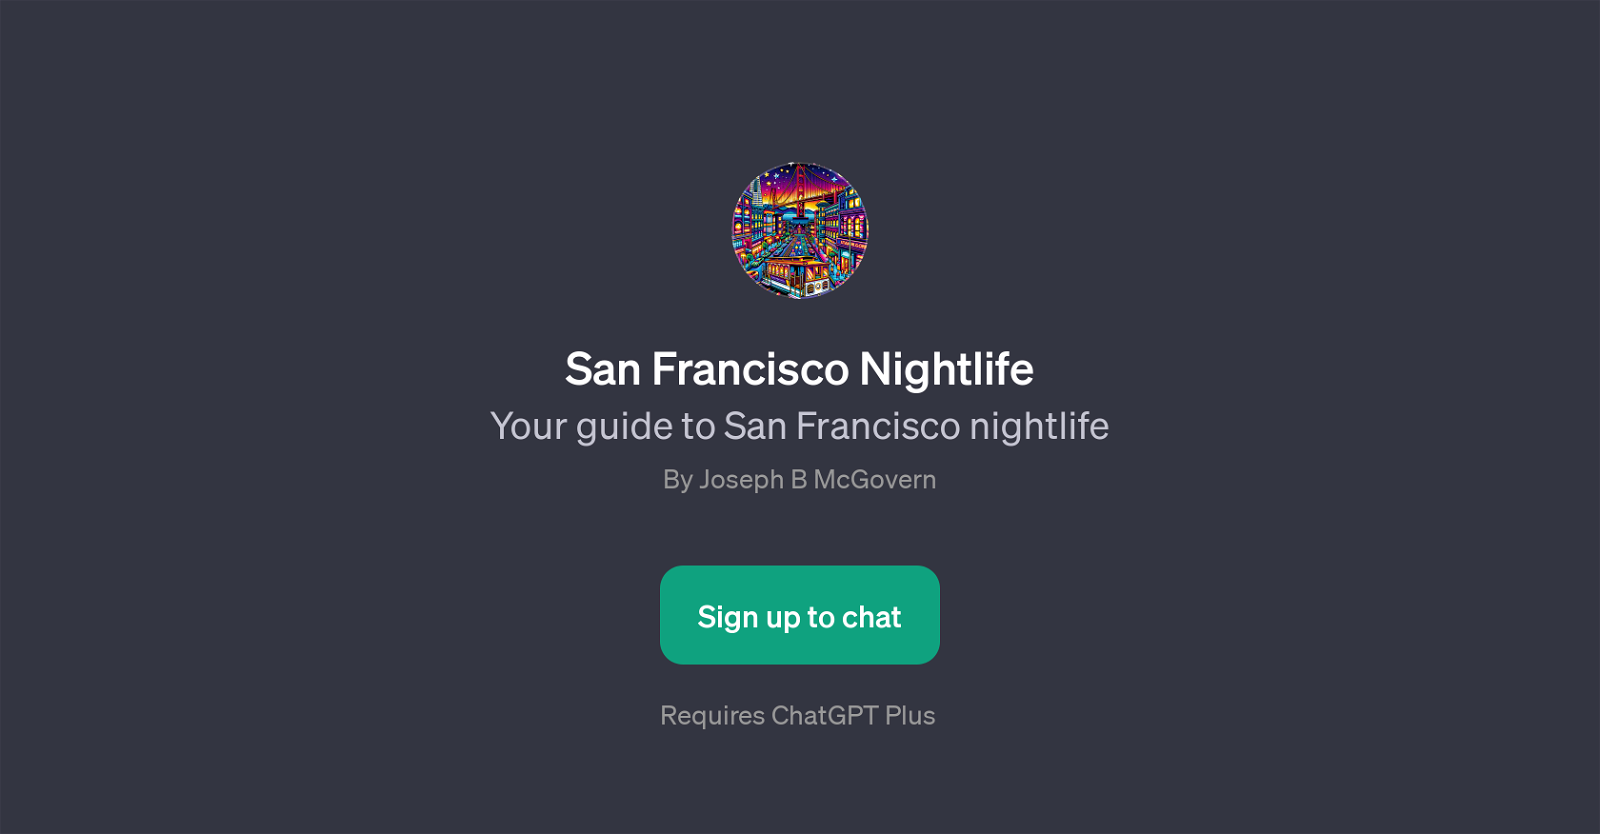 San Francisco Nightlife website